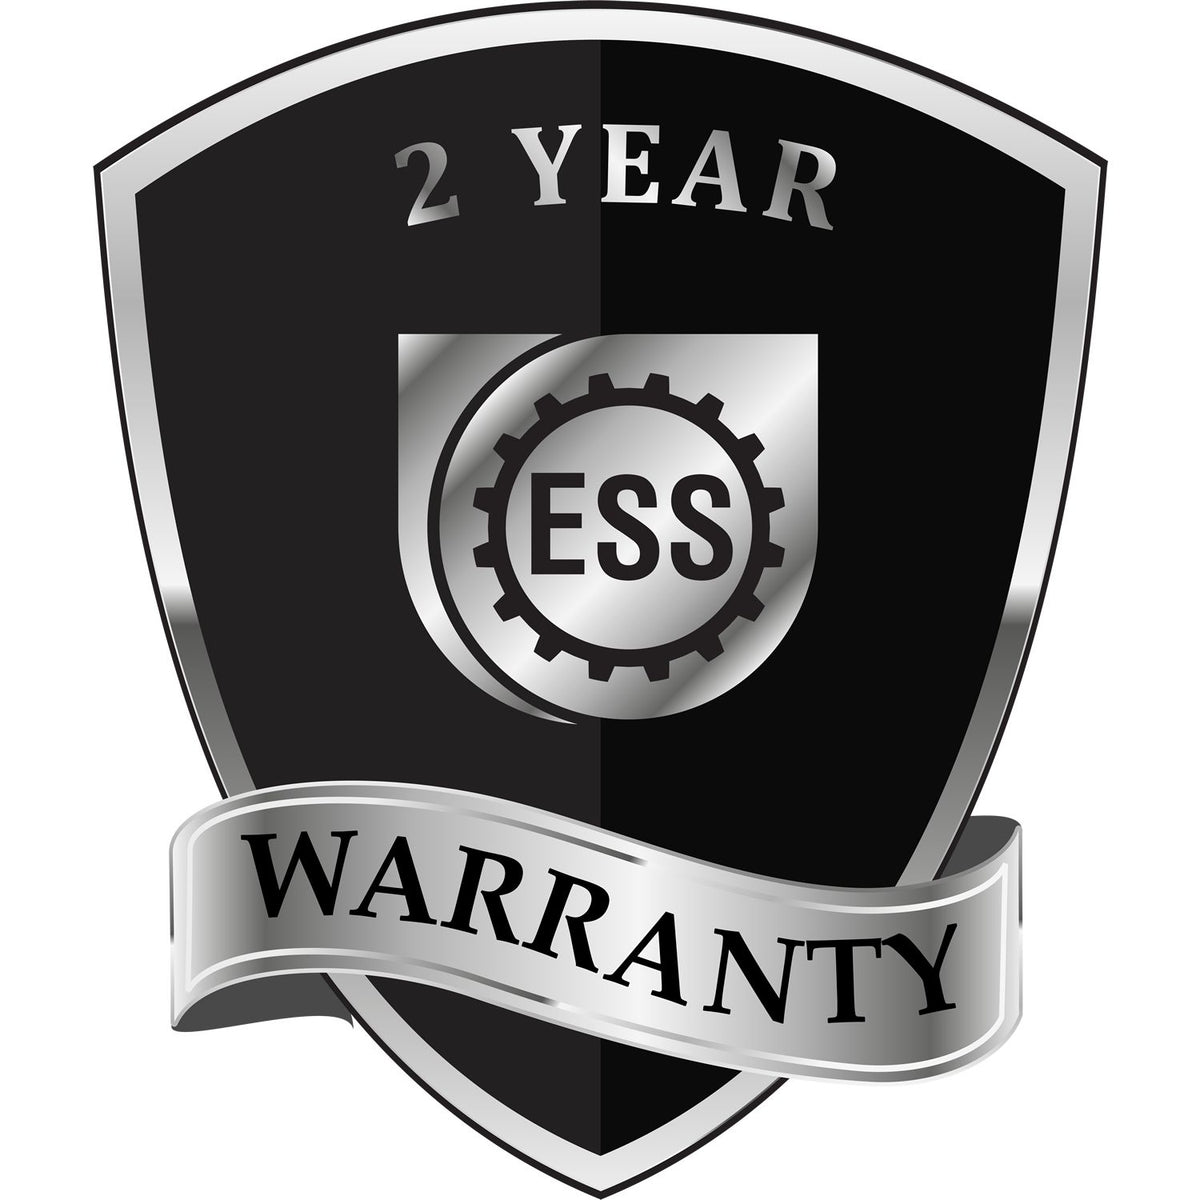 A black and silver badge or emblem showing warranty information for the Hybrid Georgia Land Surveyor Seal